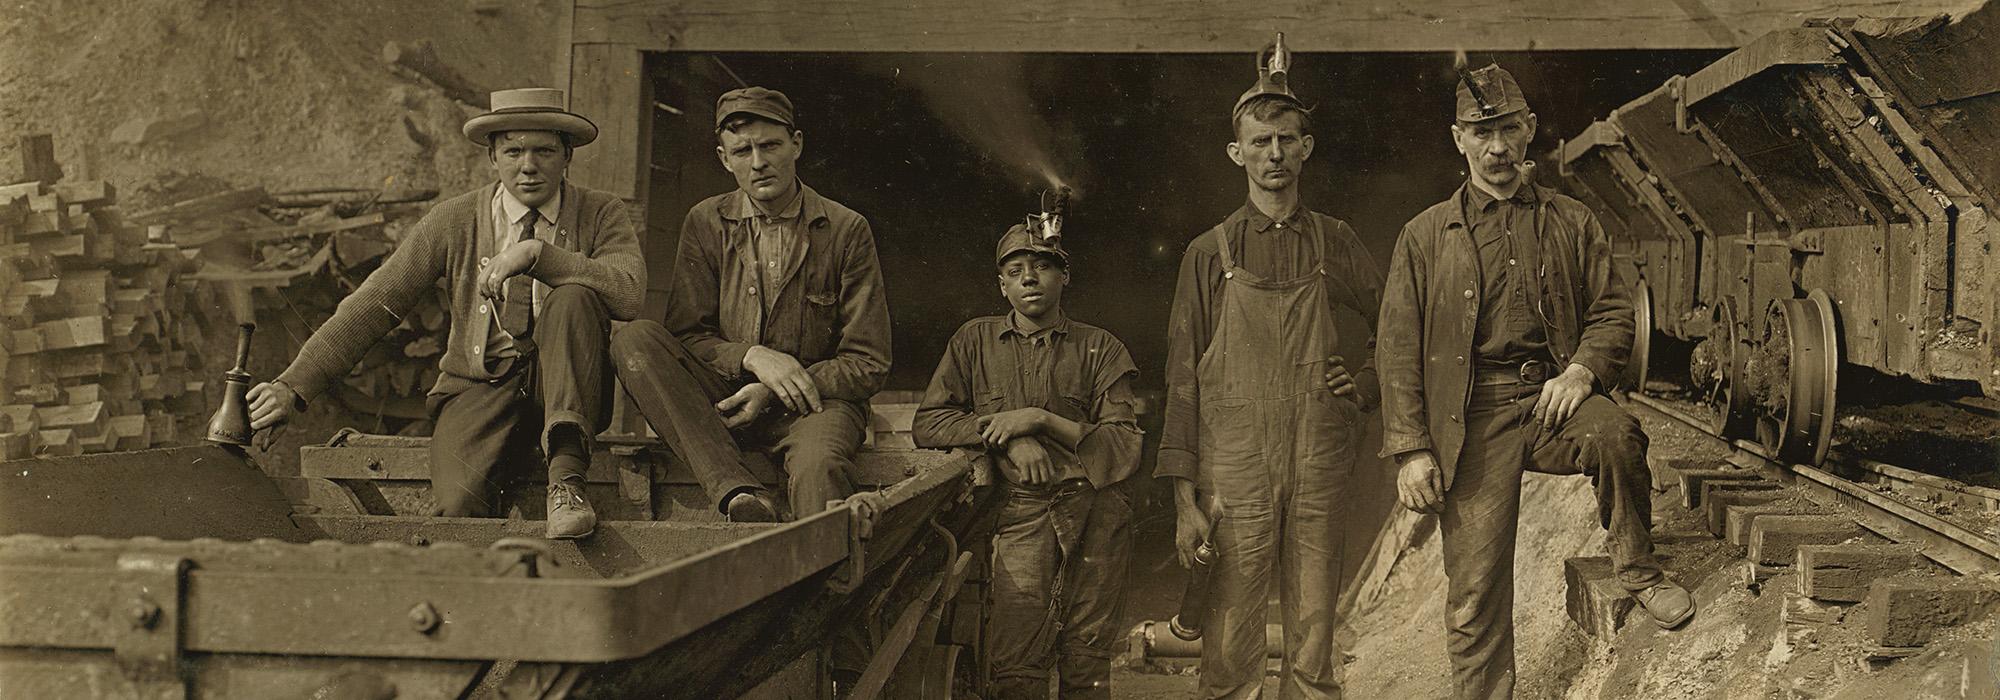 Miners in West Virginia